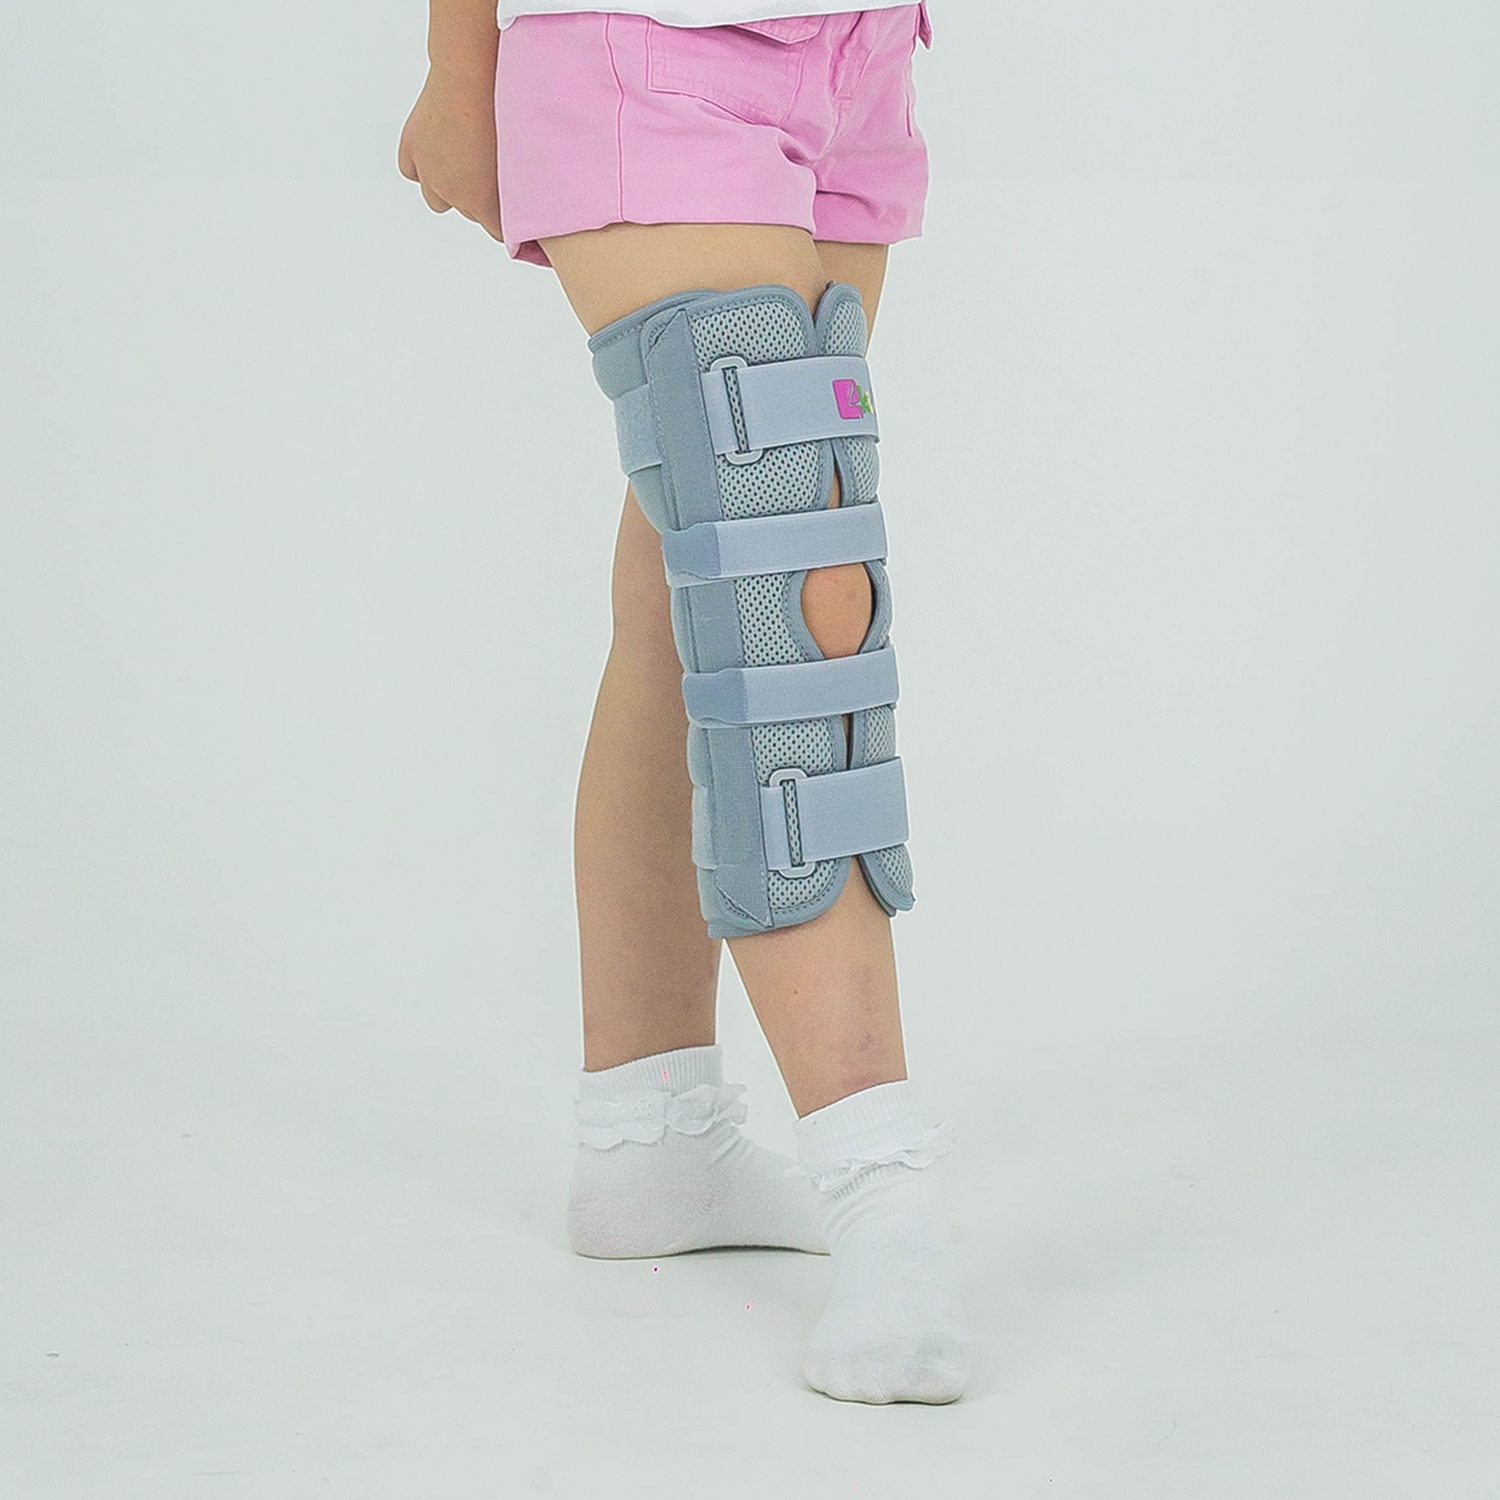 Knee brace OKD-12  Reh4Mat – lower limb orthosis and braces